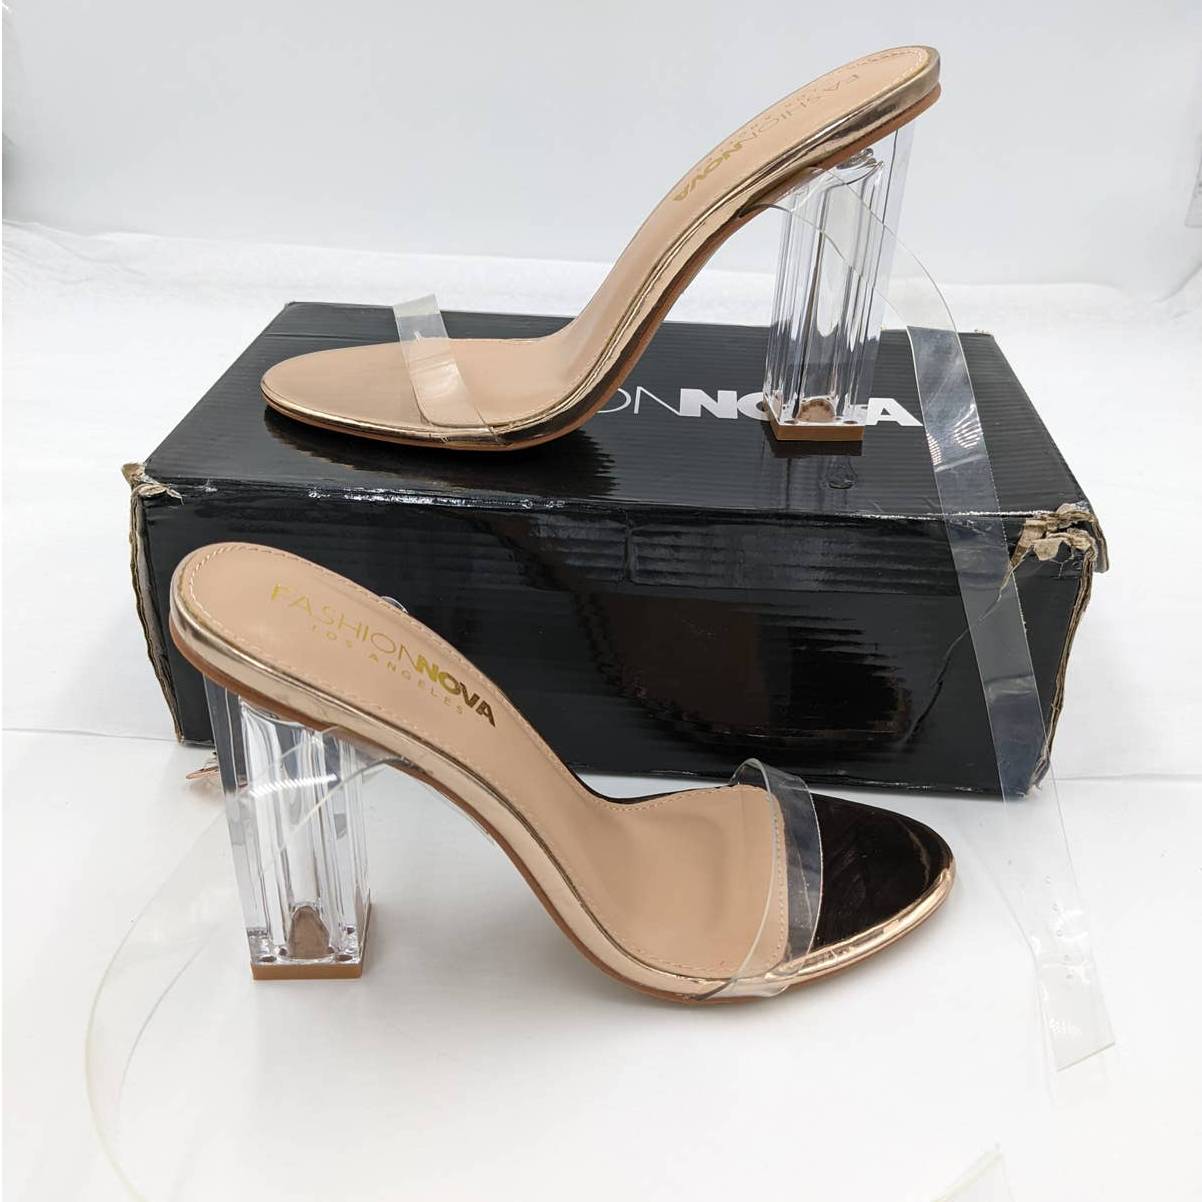 Women's The Glass Slipper Heel Shoes in Clear Size 6 Wide by Fashion Nova